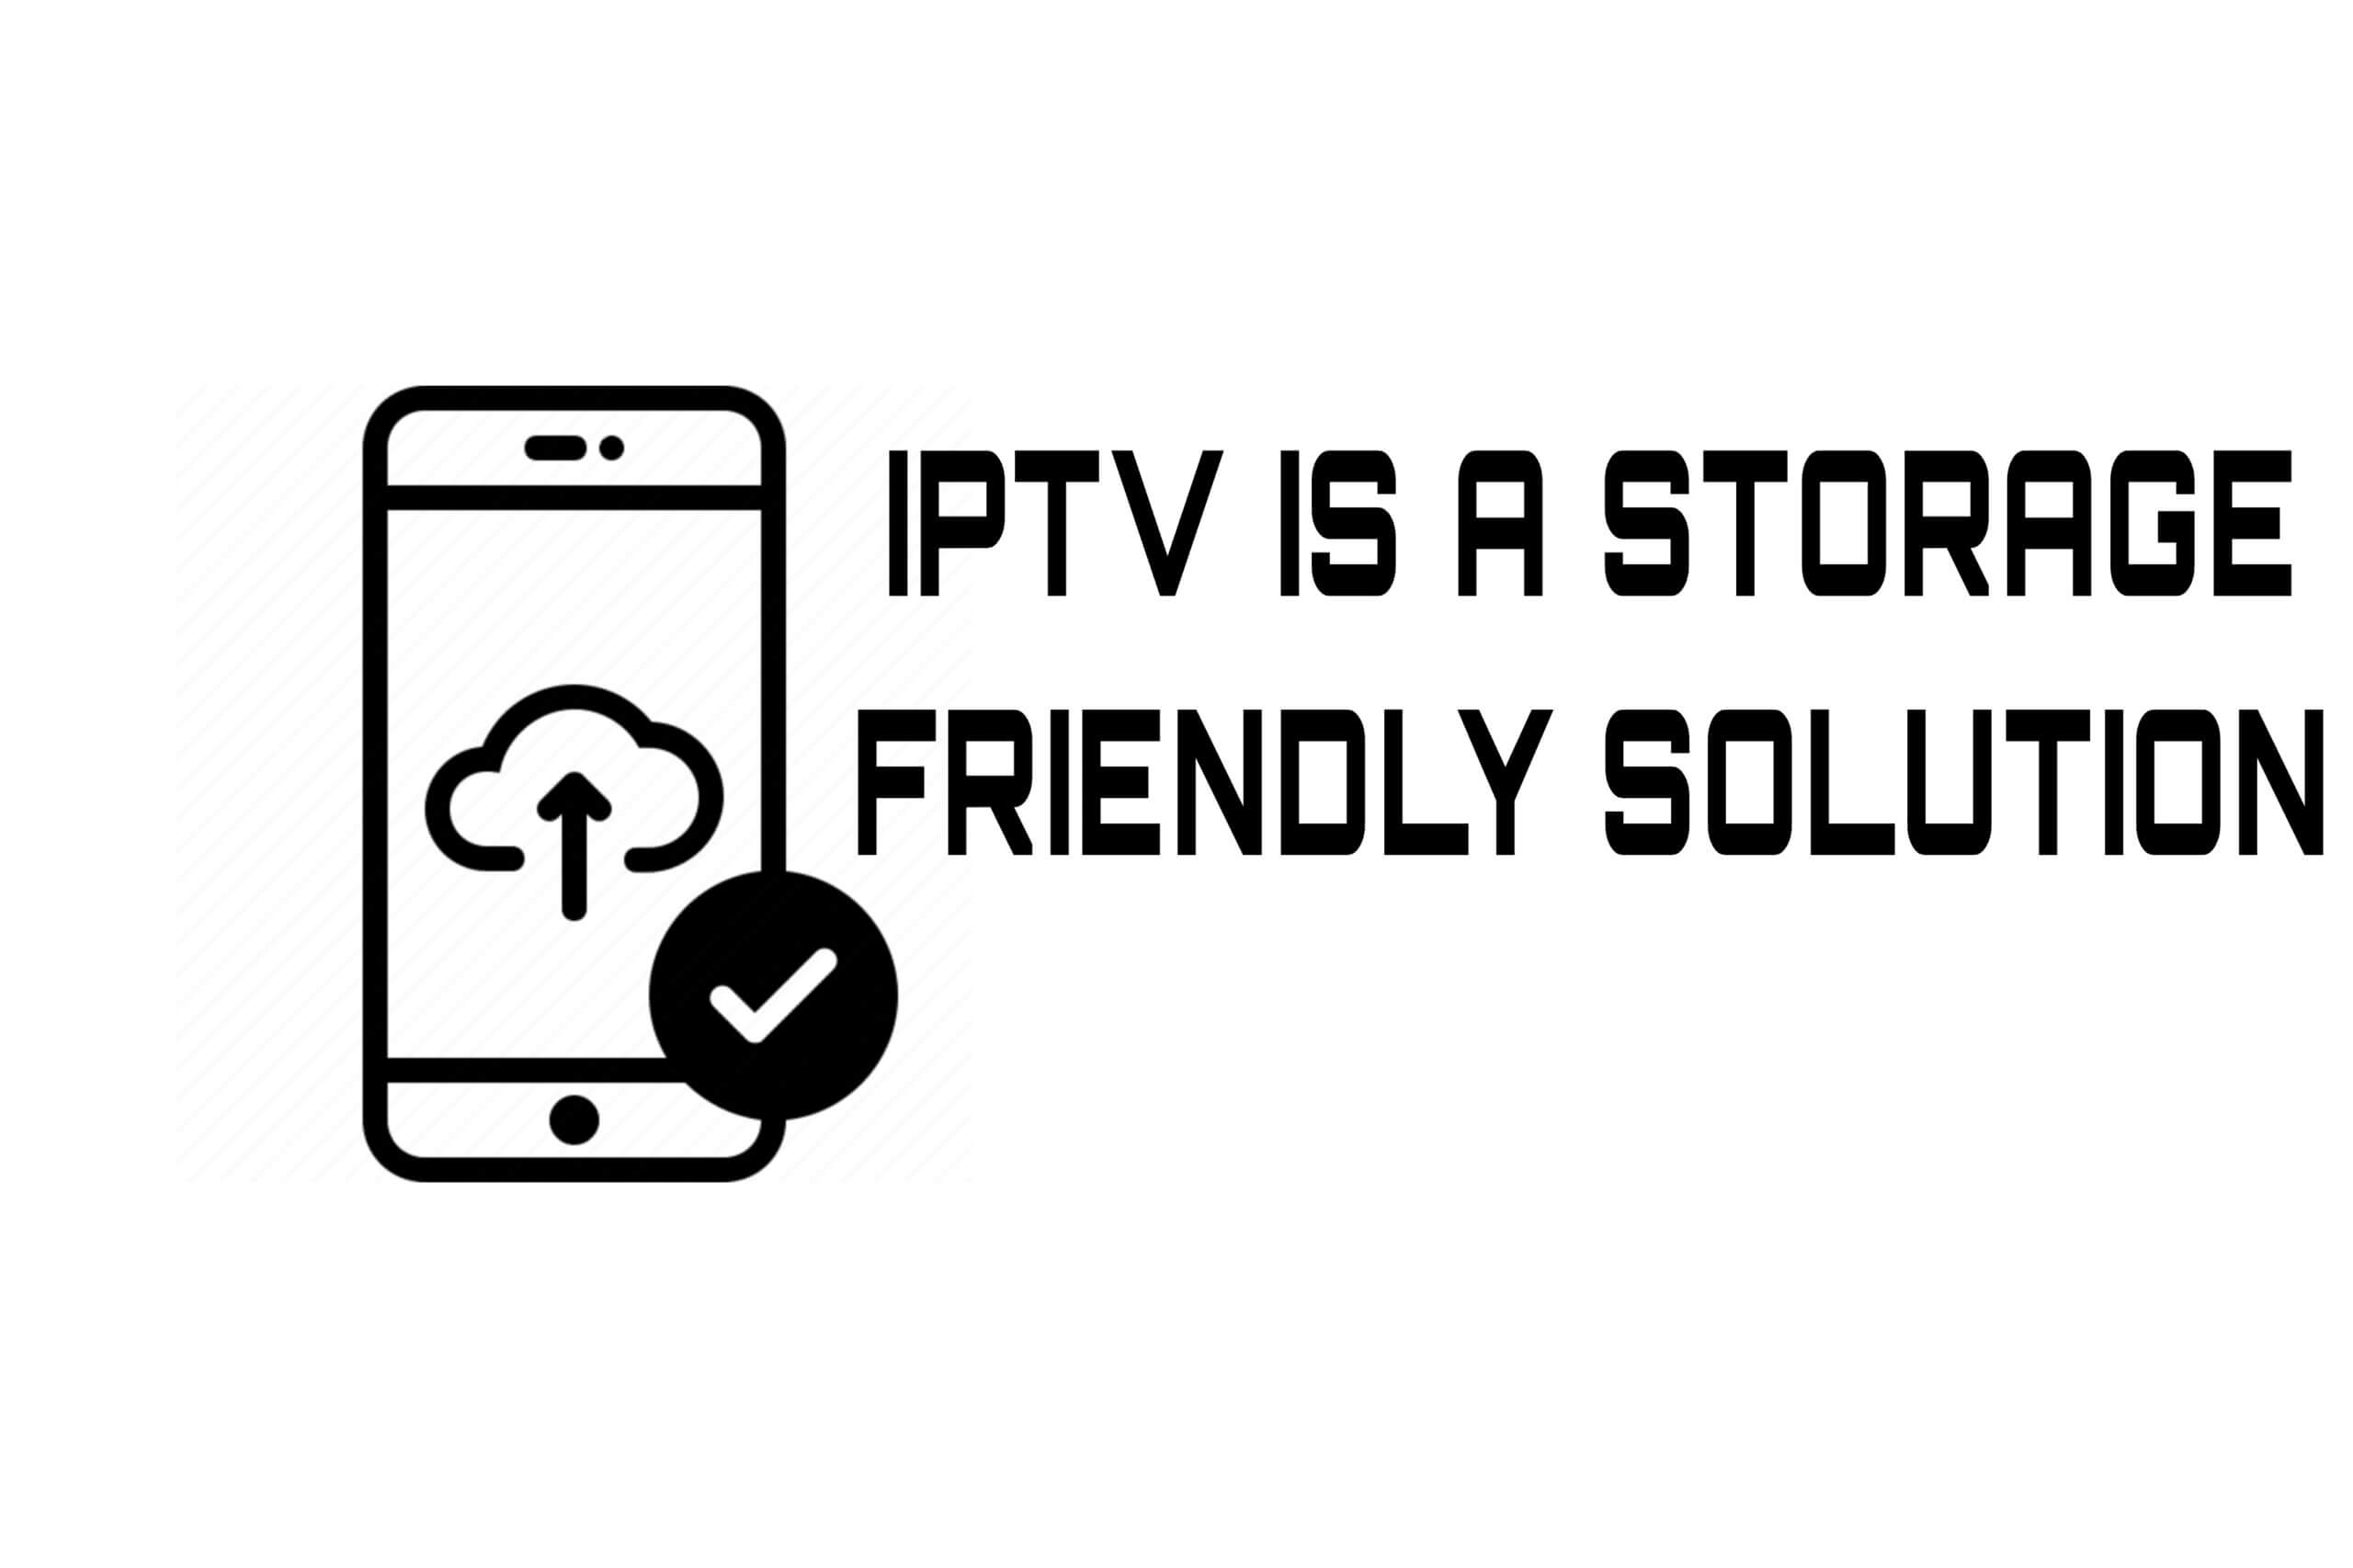 IPTV features 3